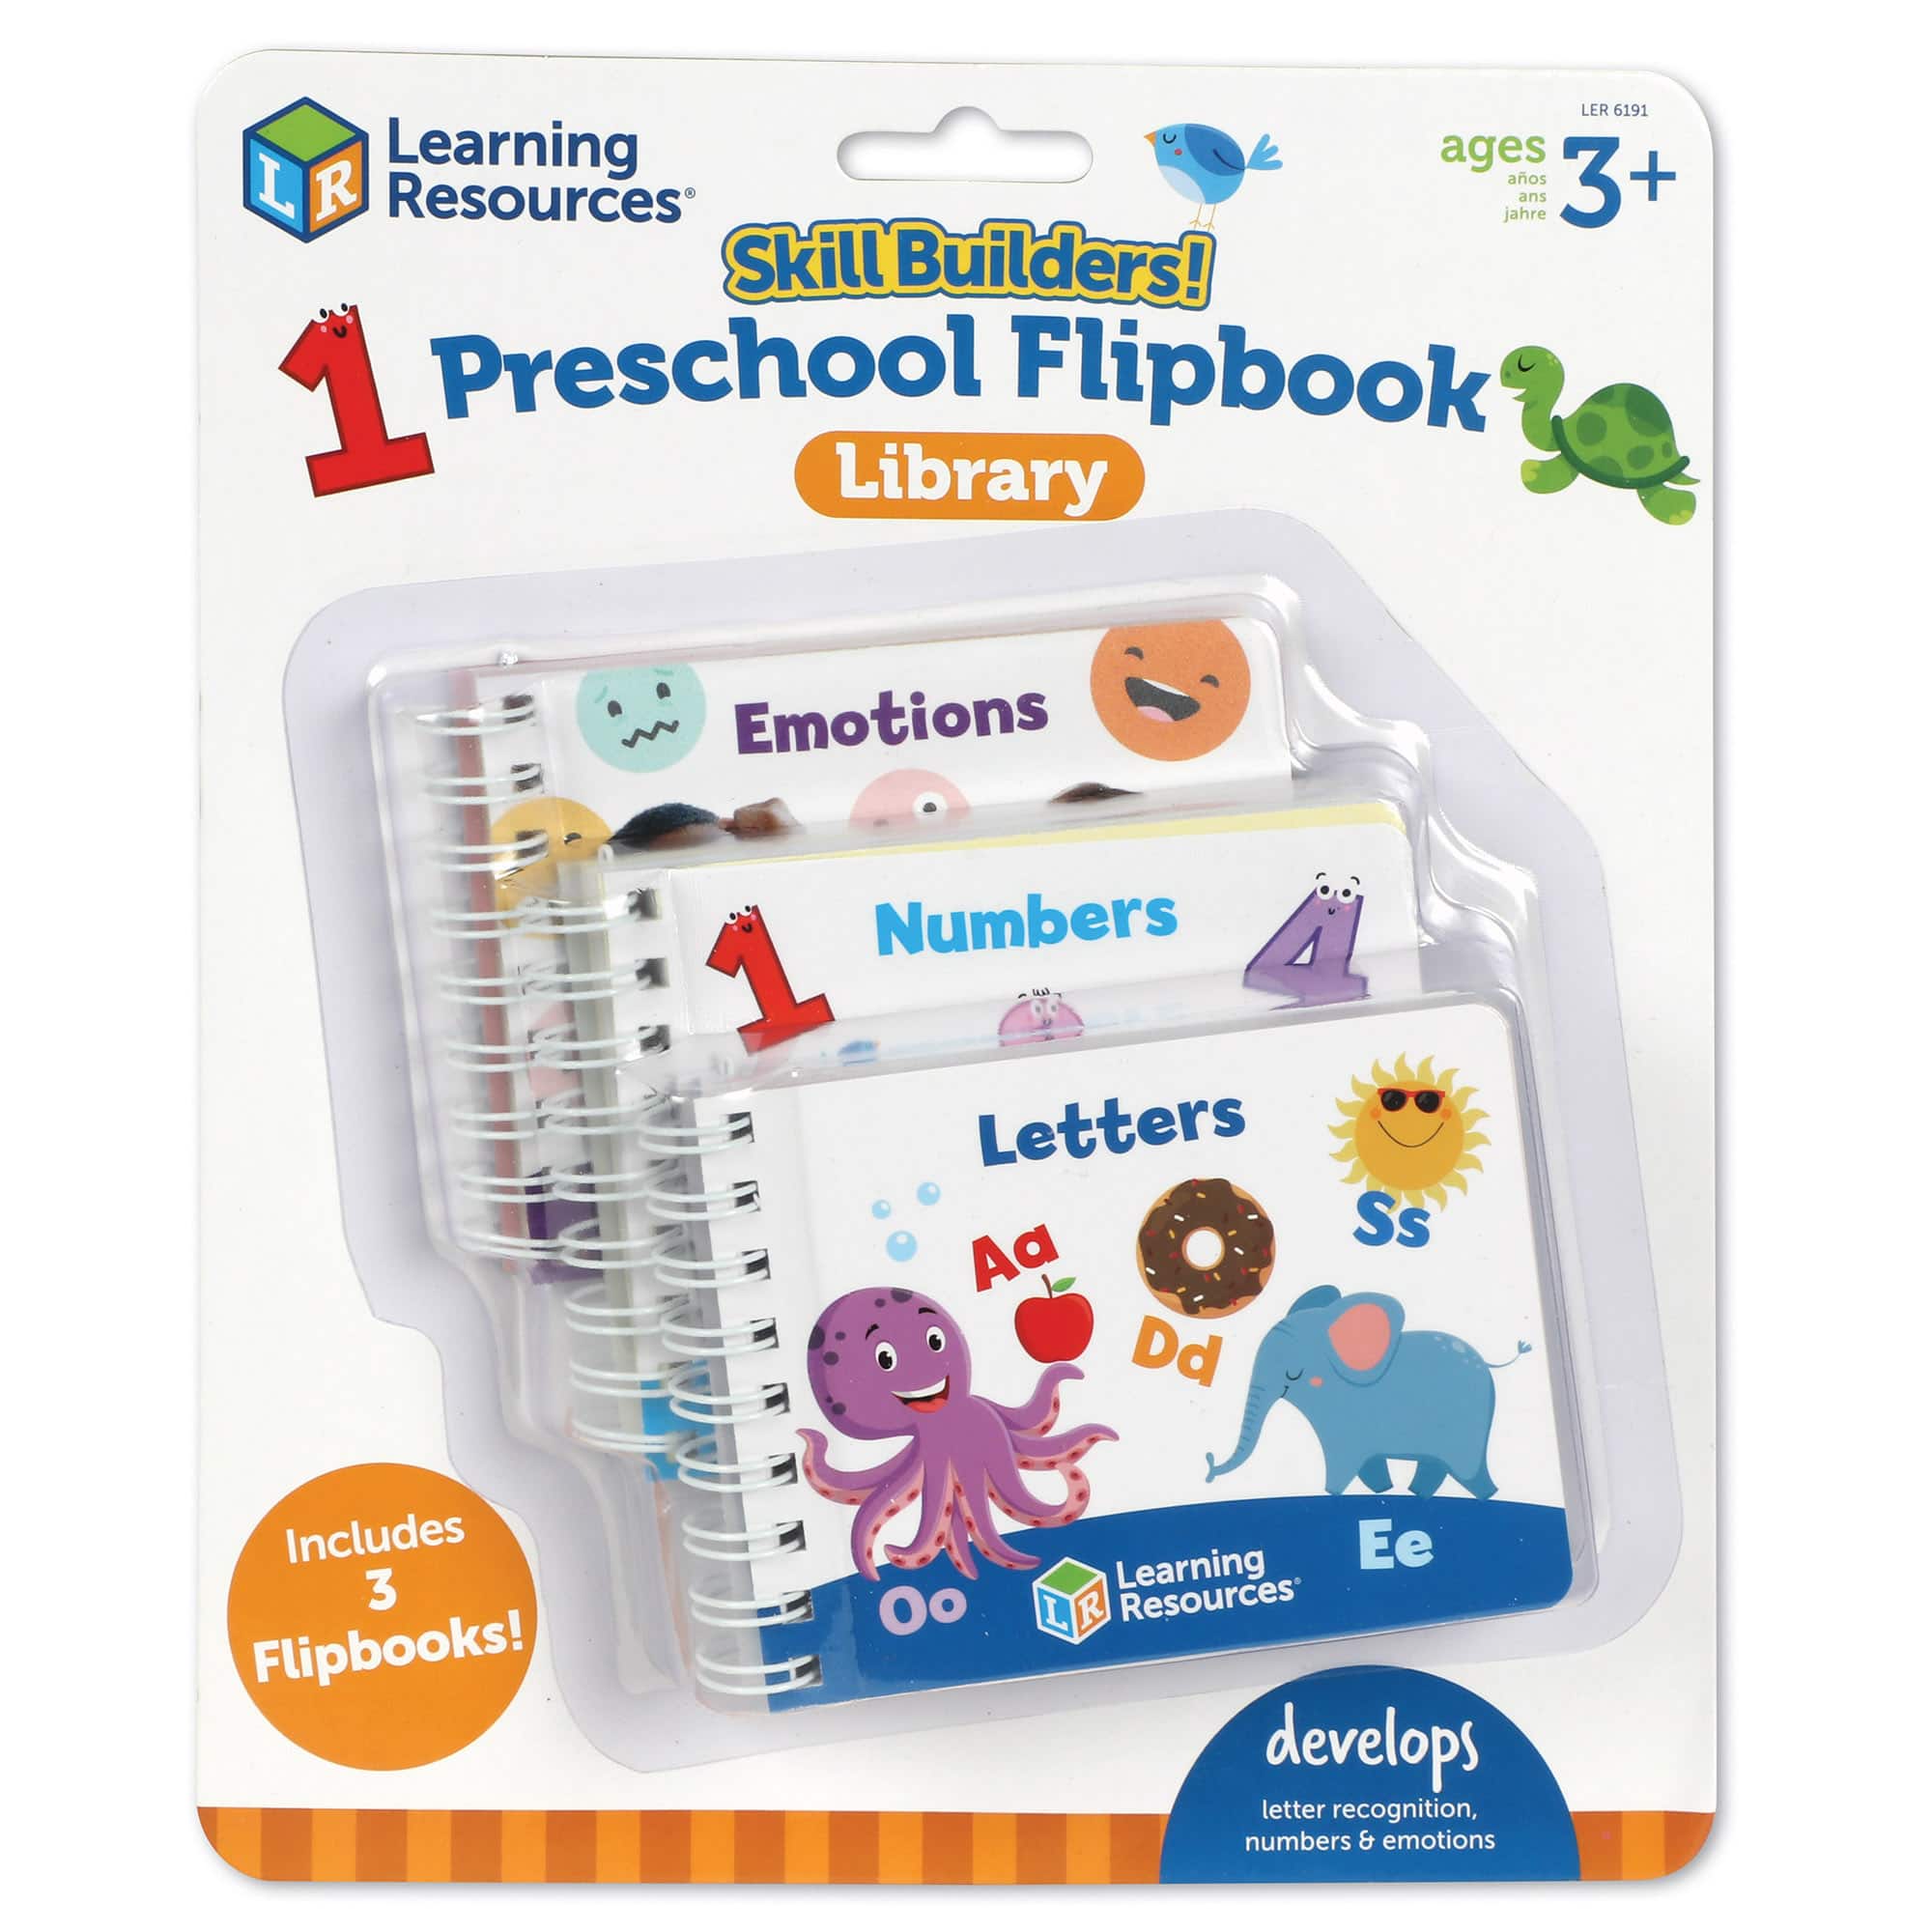 Learning Resources Skill Builders! Preschool Flipbook Library